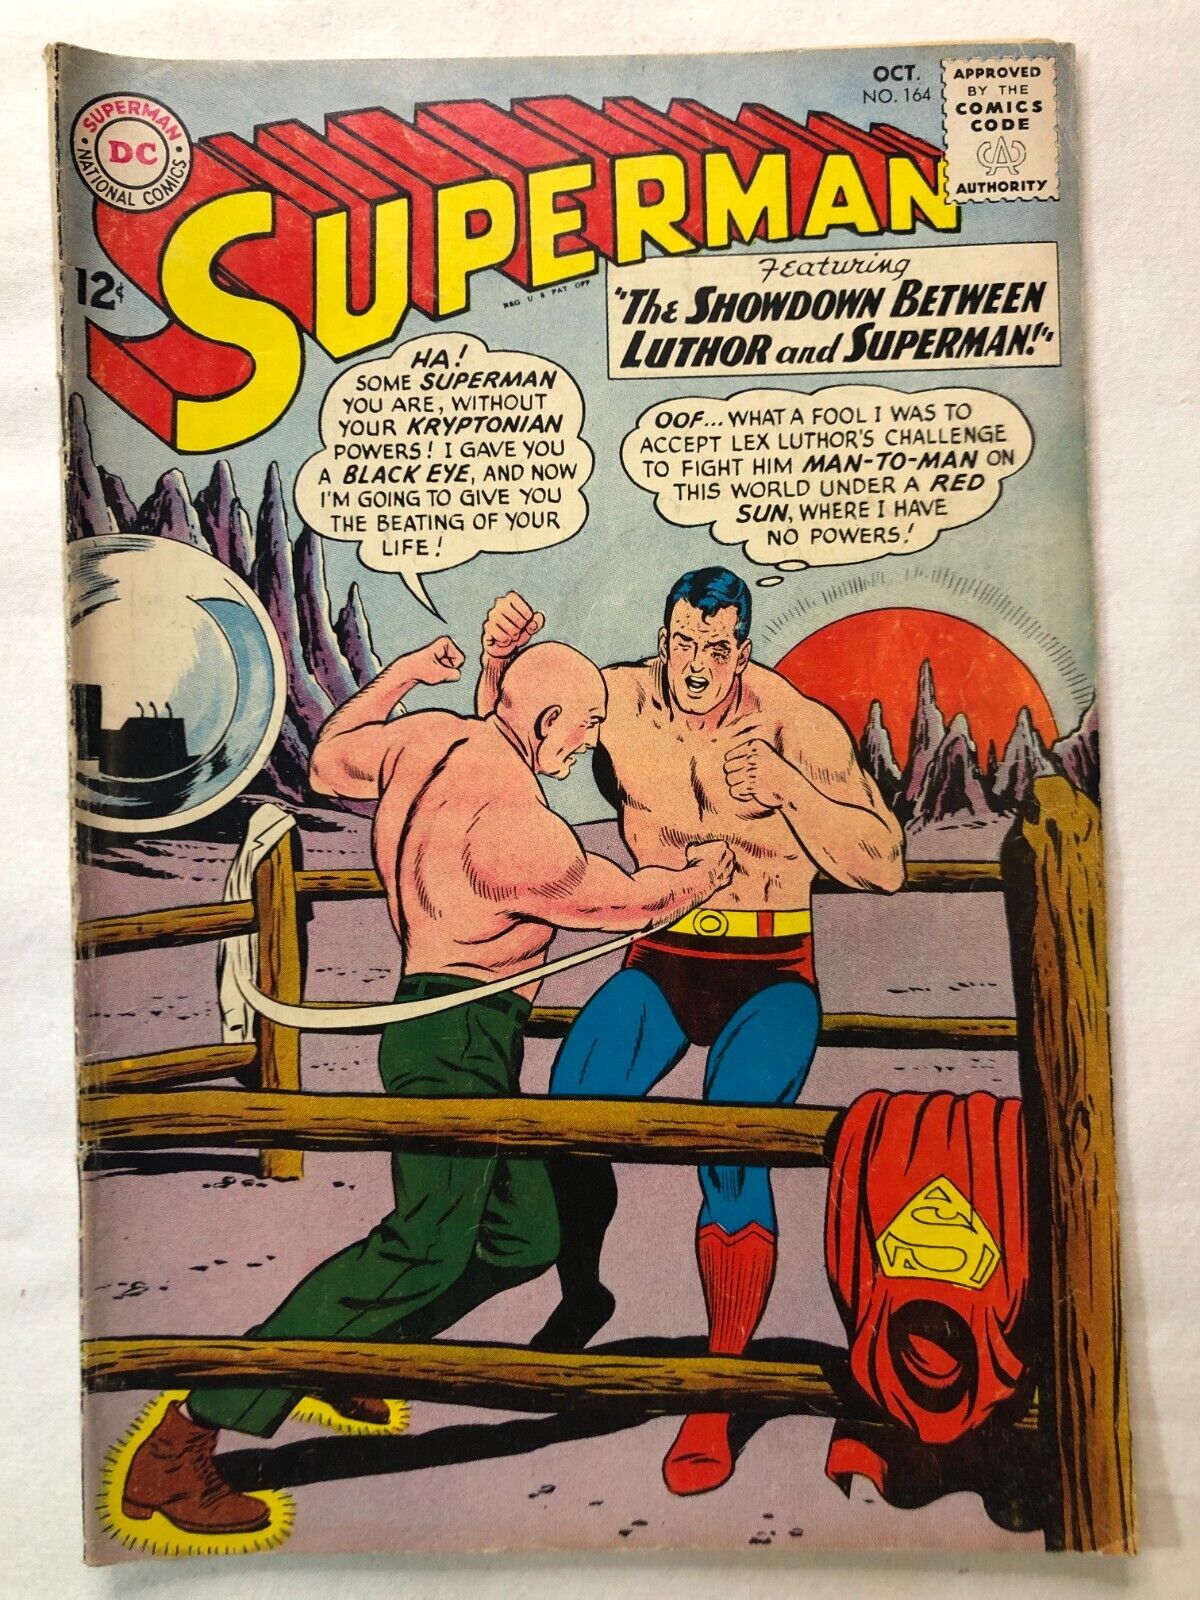 Superman #164 DC Comics Oct 1963 Vintage DC Comics Nice Vintage Collectable